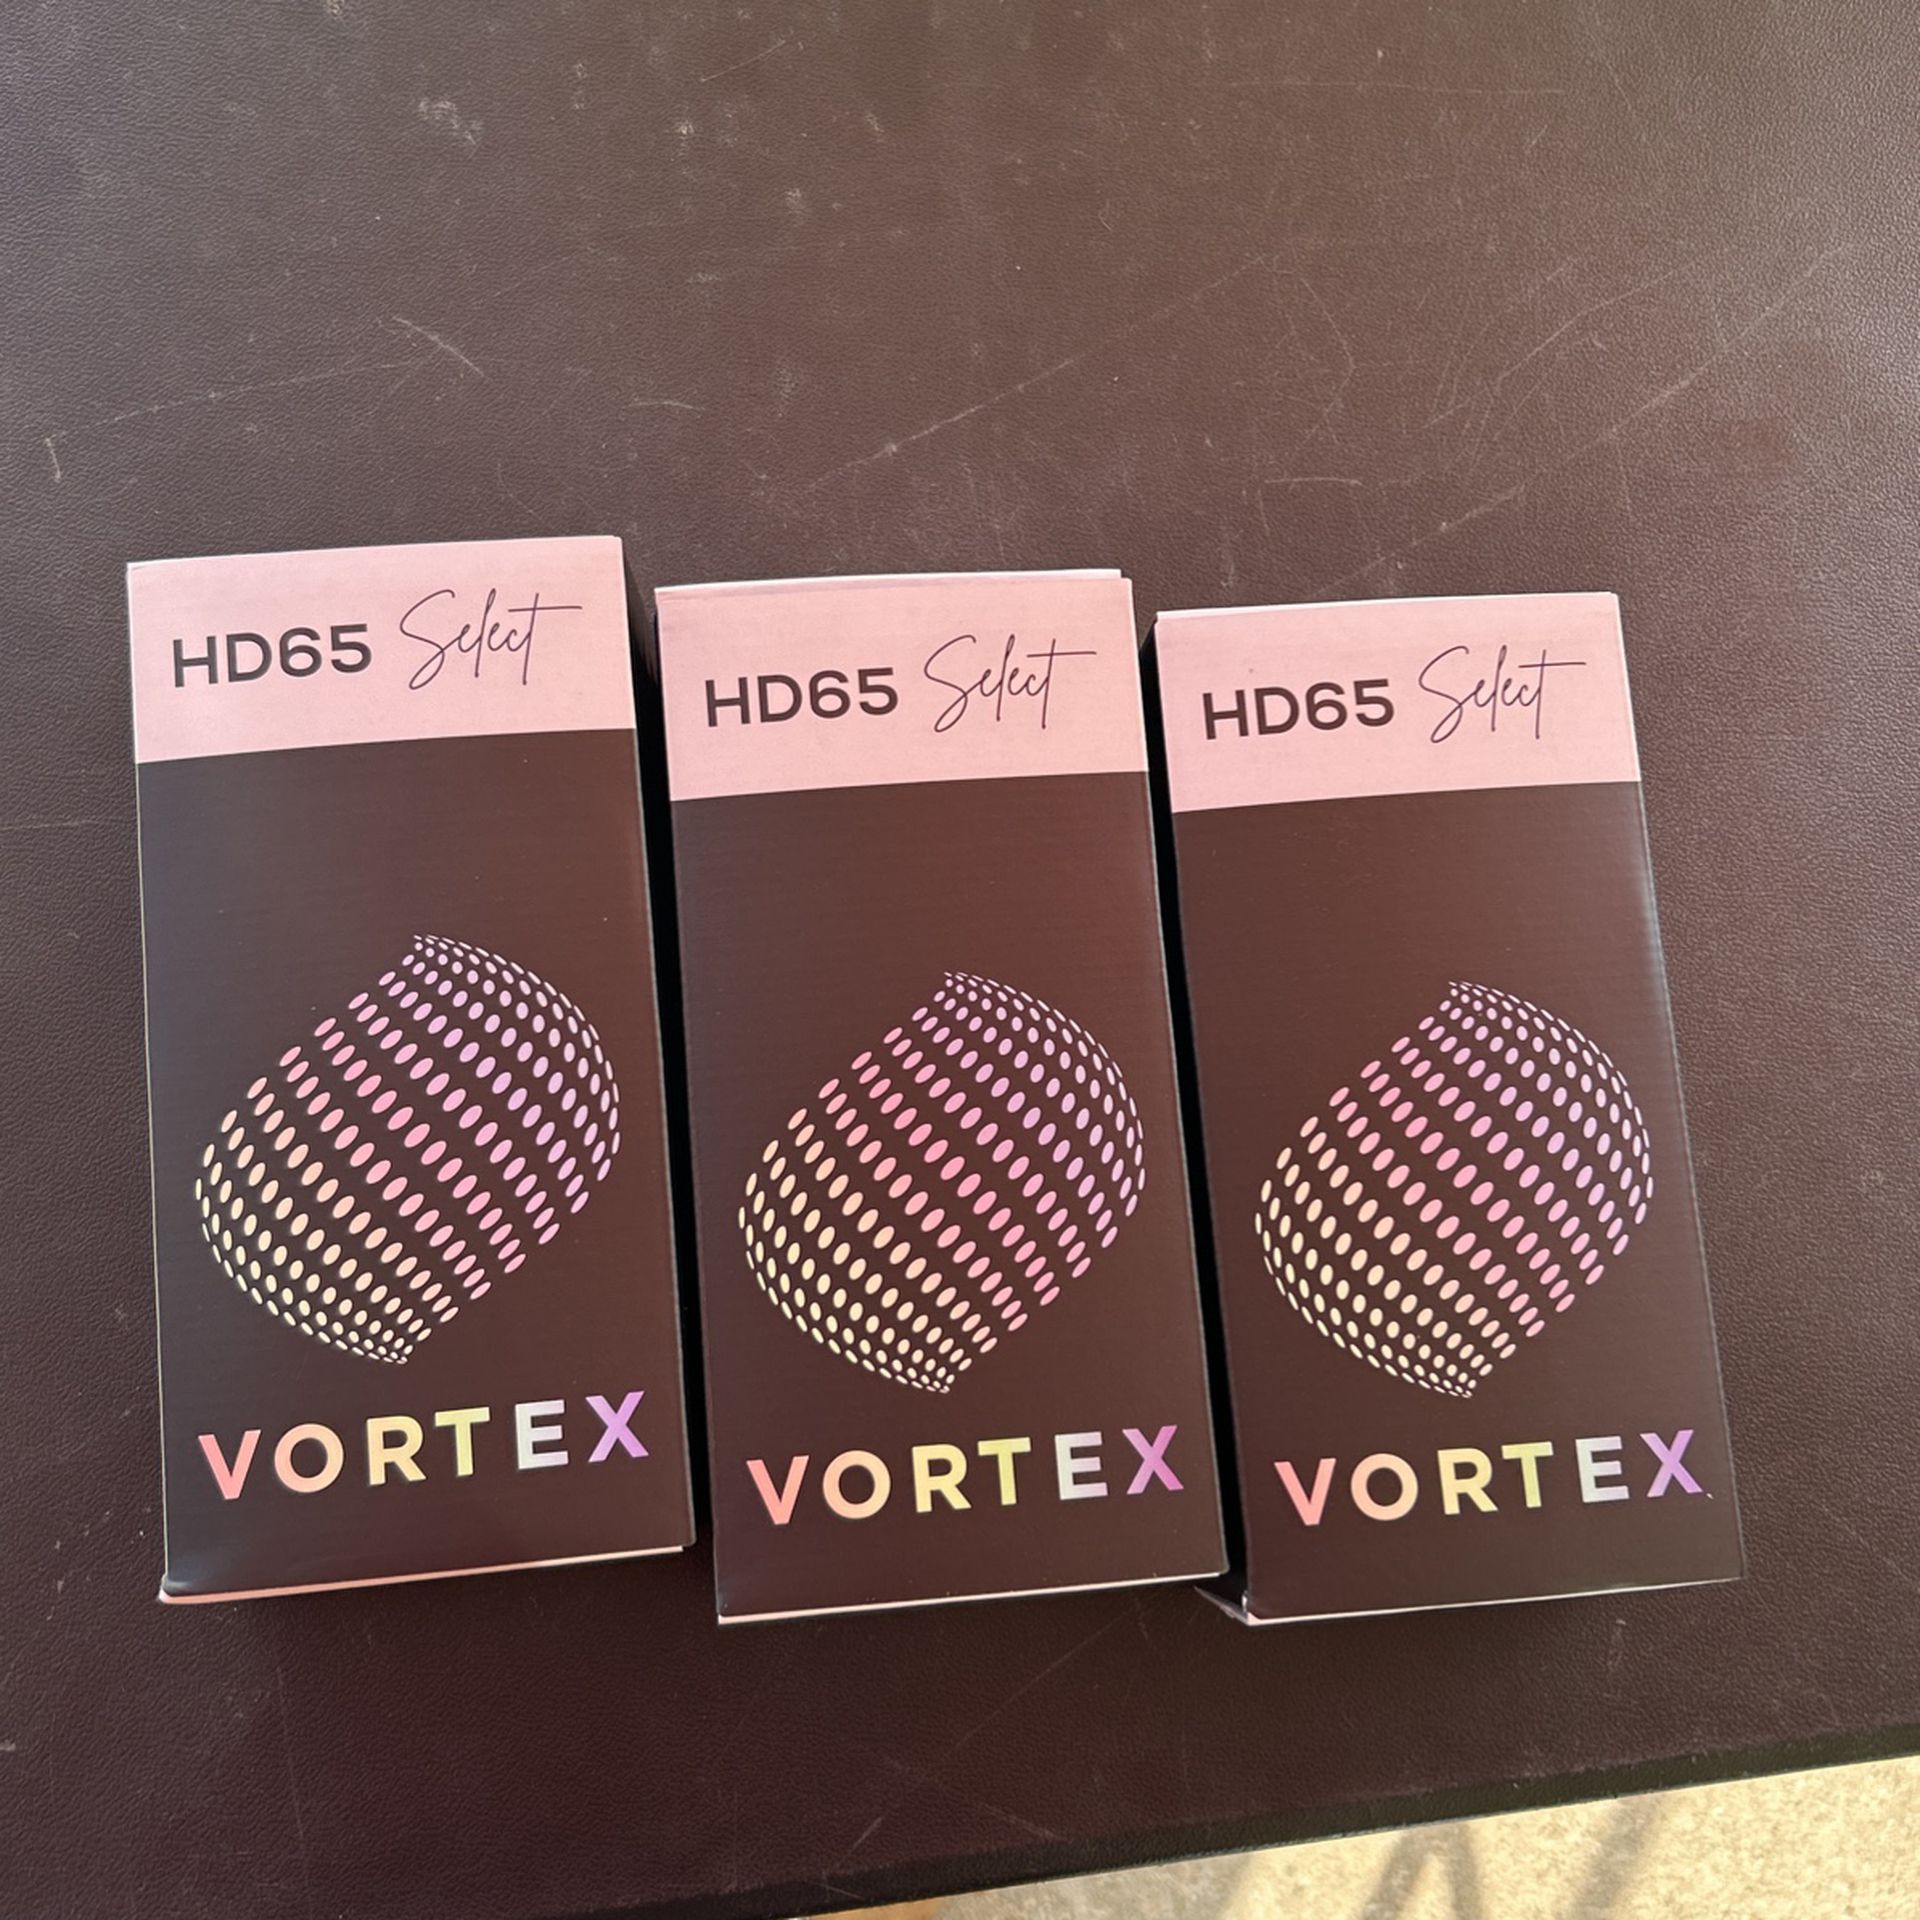 Brand new Vortex phones